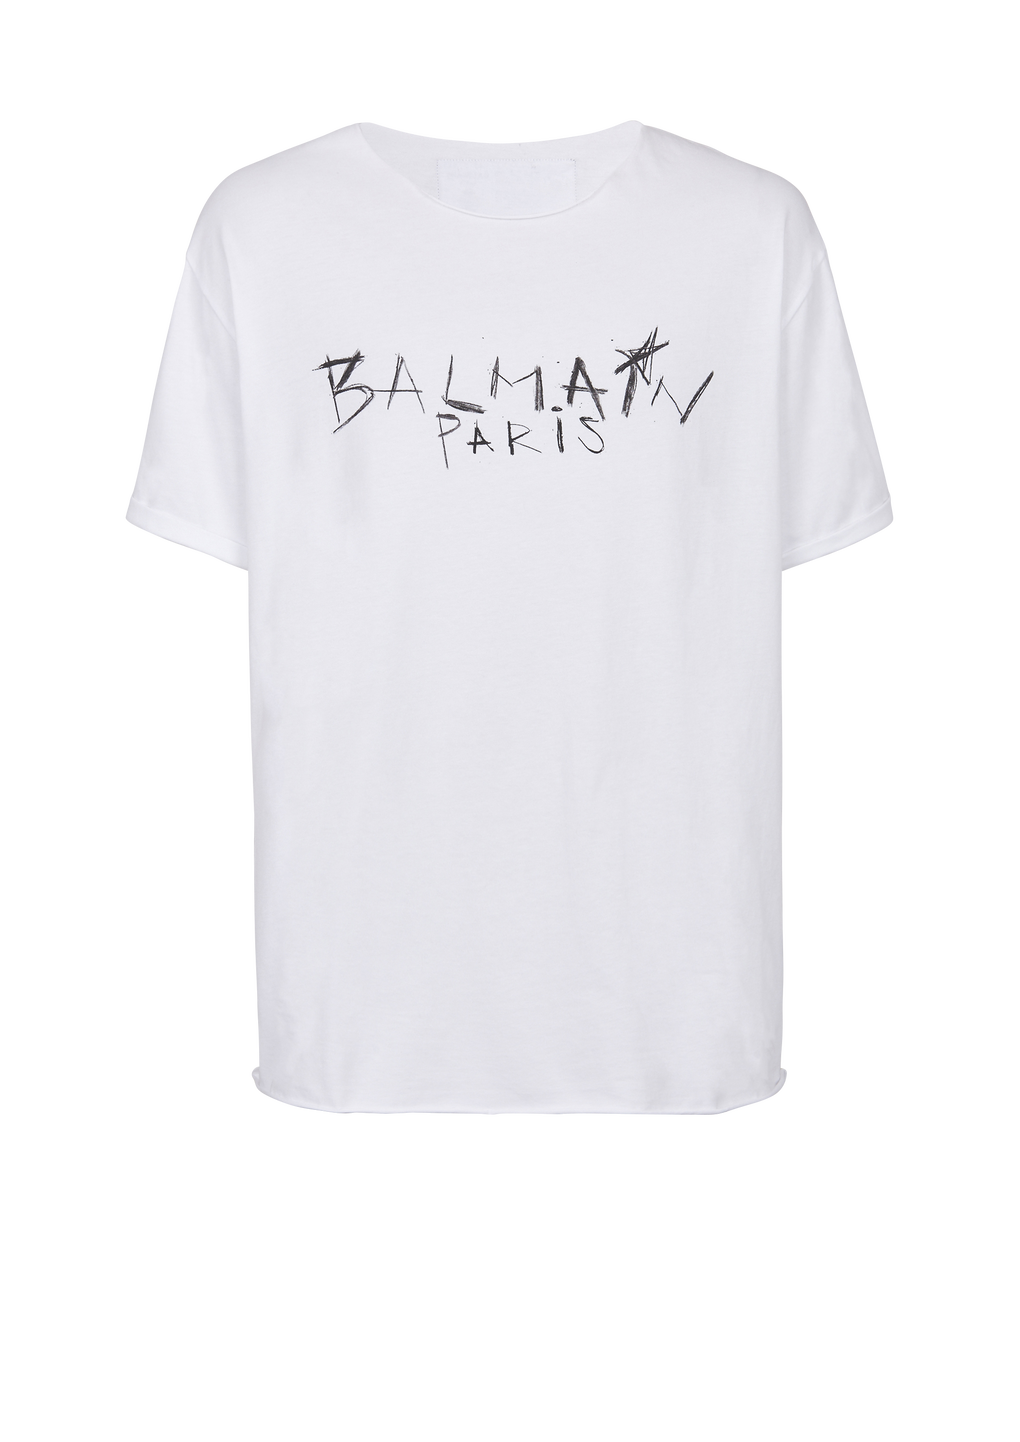 Cotton T-shirt with Balmain Paris graffiti logo print, white, hi-res